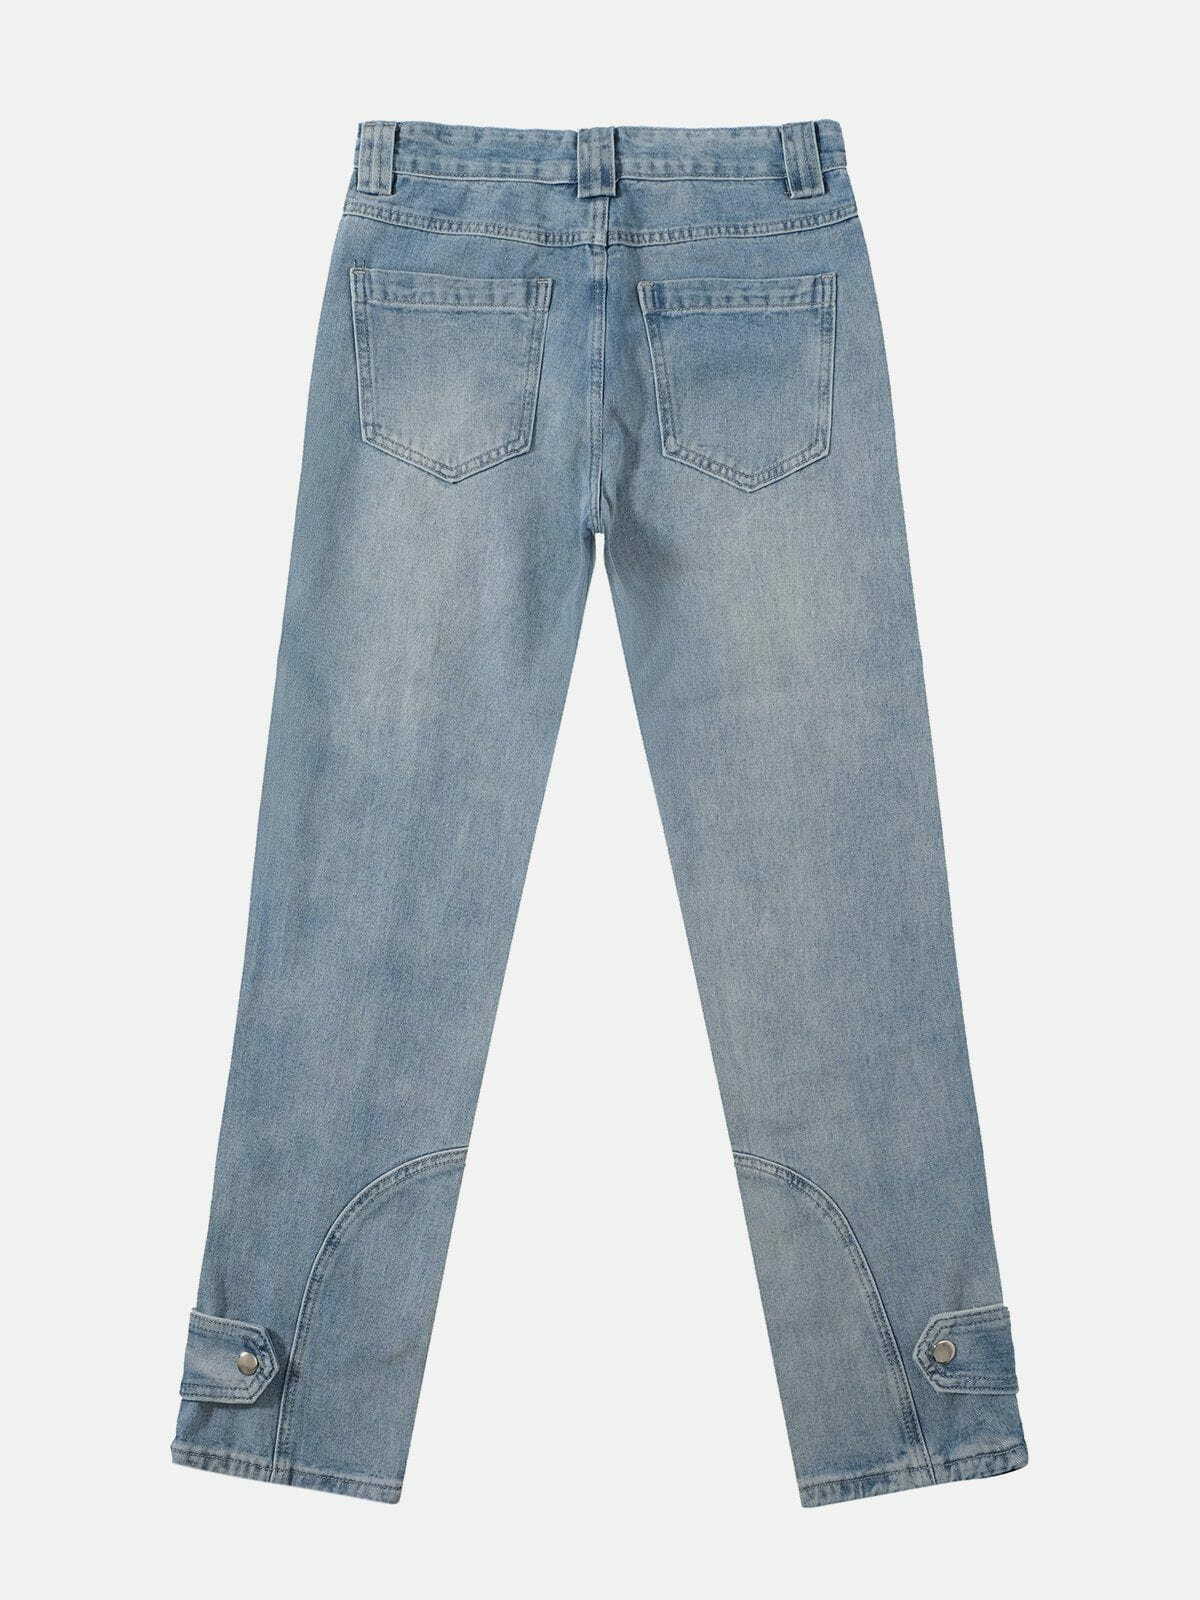 retro split jeans edgy & vintage washed 3777